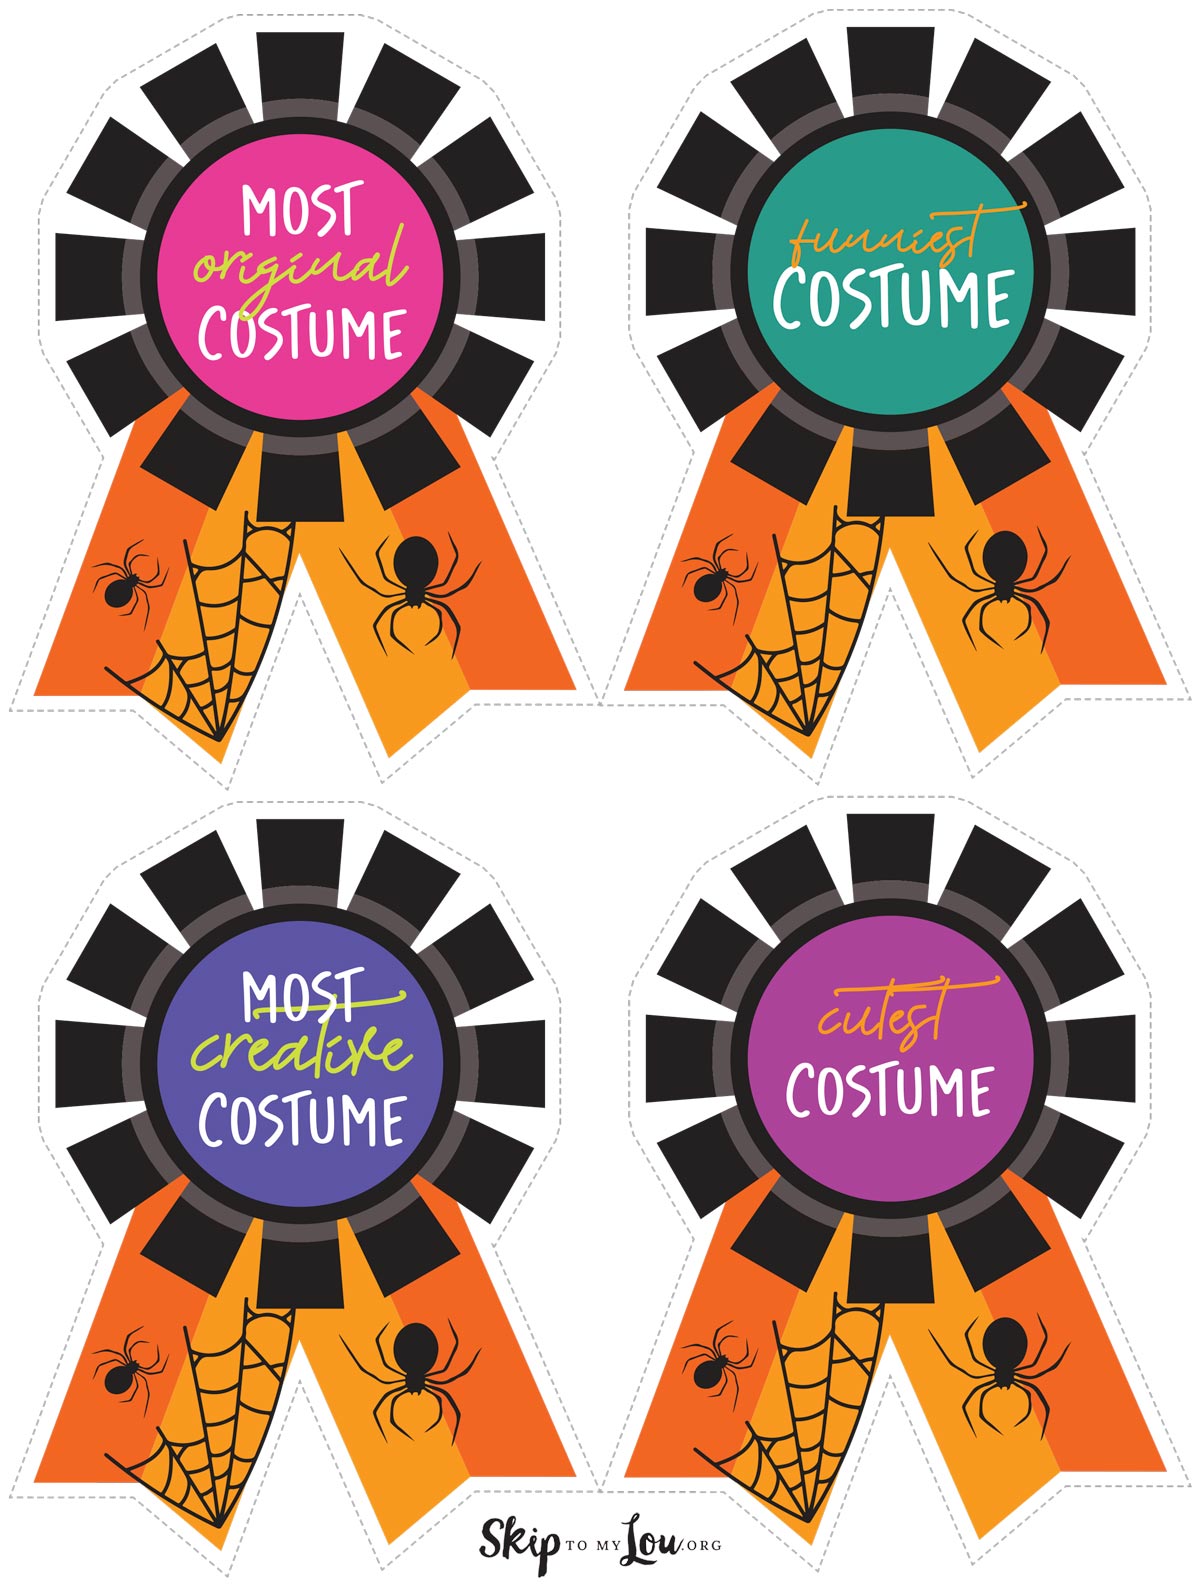 printable costume awards: Most Original Costume Funniest Costume Most Creative Costume Cutest Costume